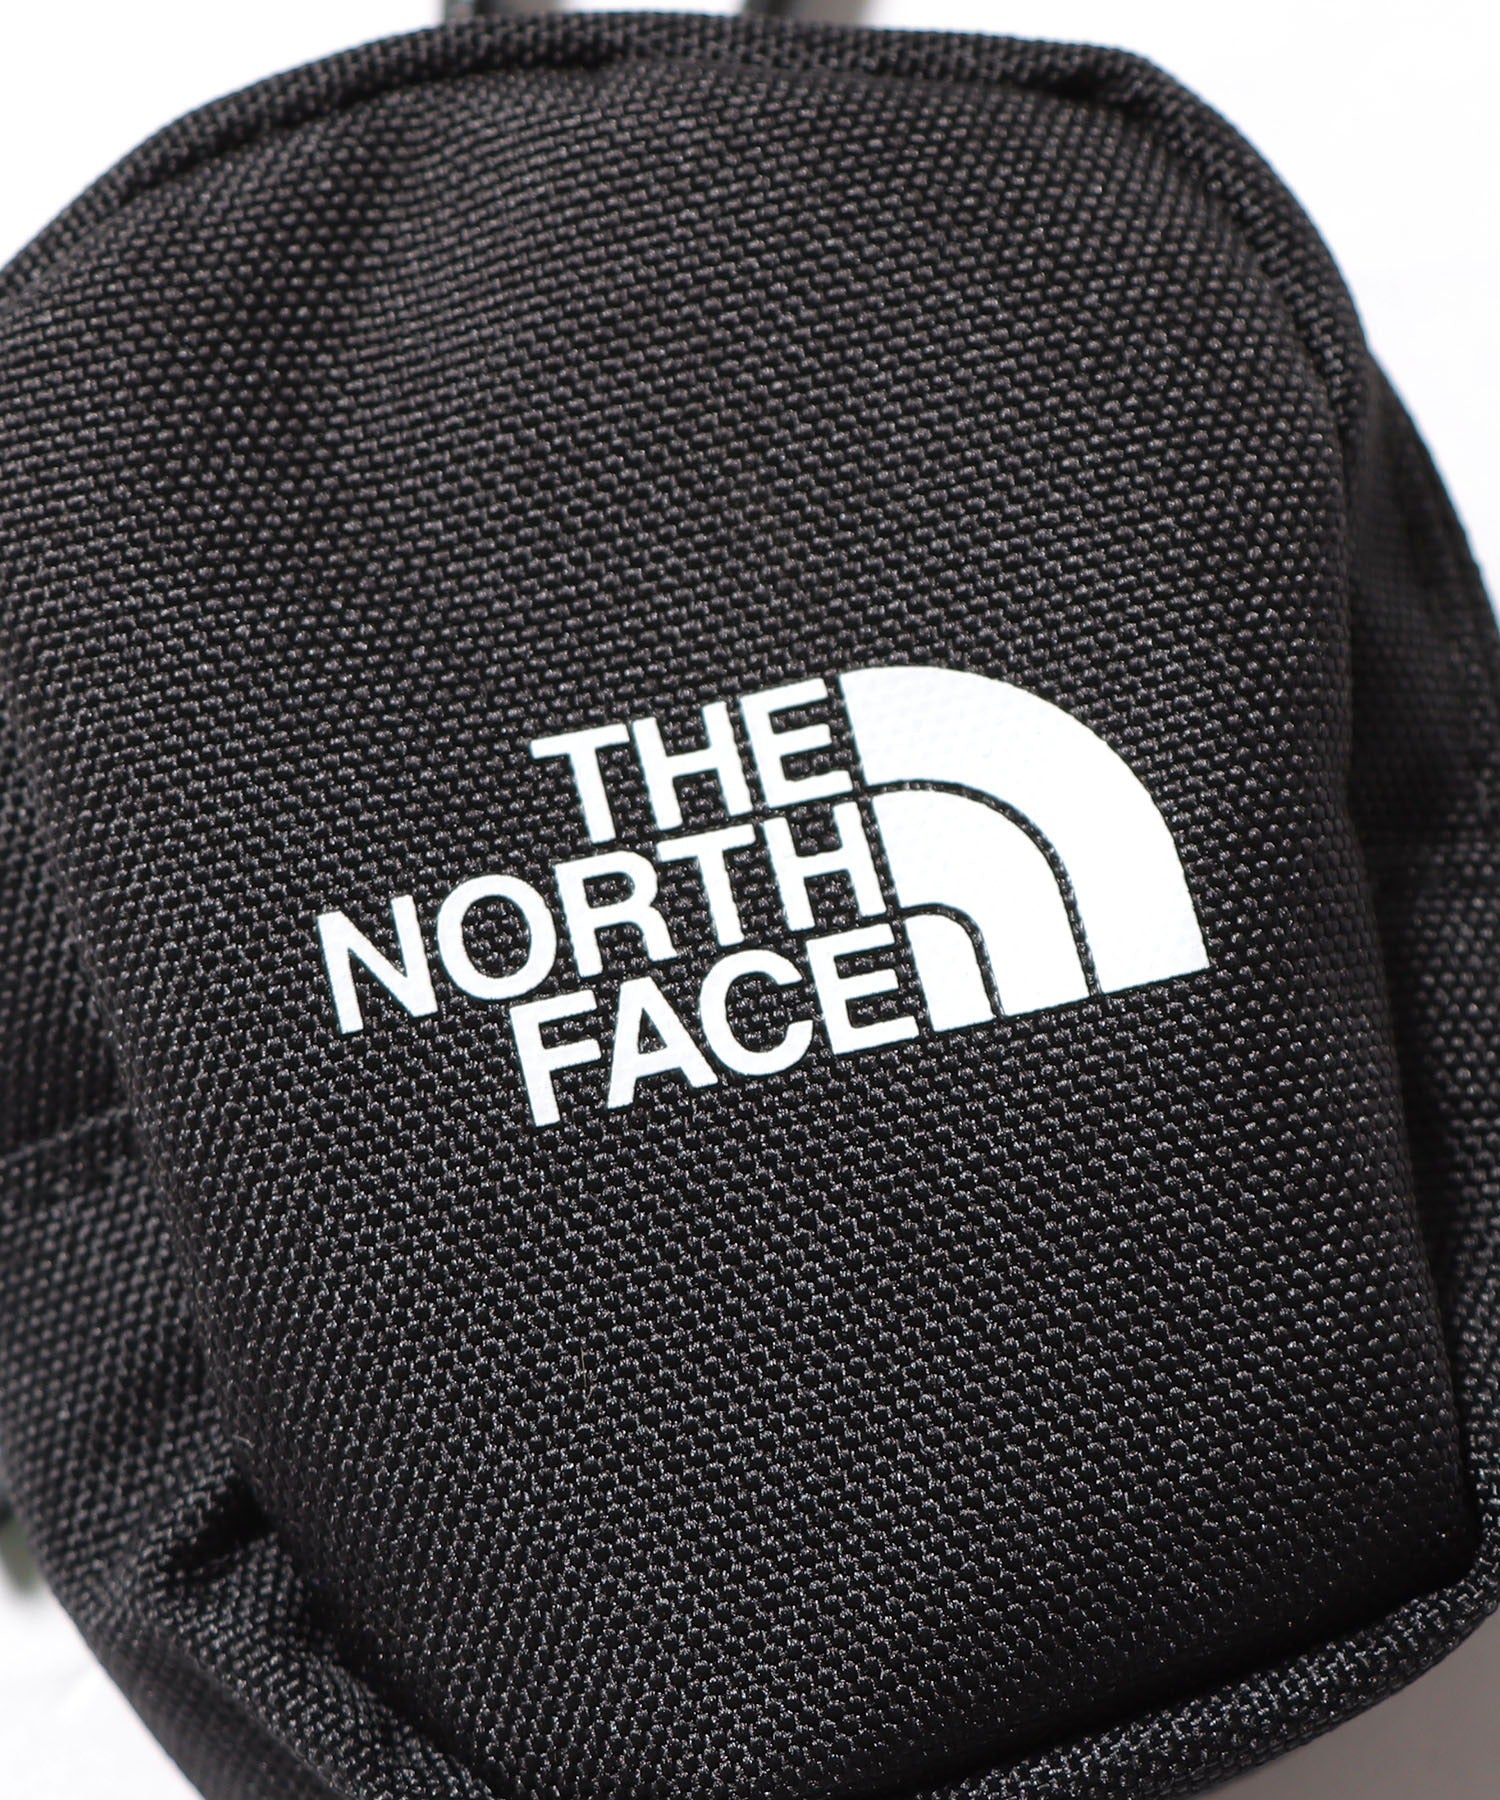 THE NORTH FACE/ザ・ノースフェイス WL Mini Pouch